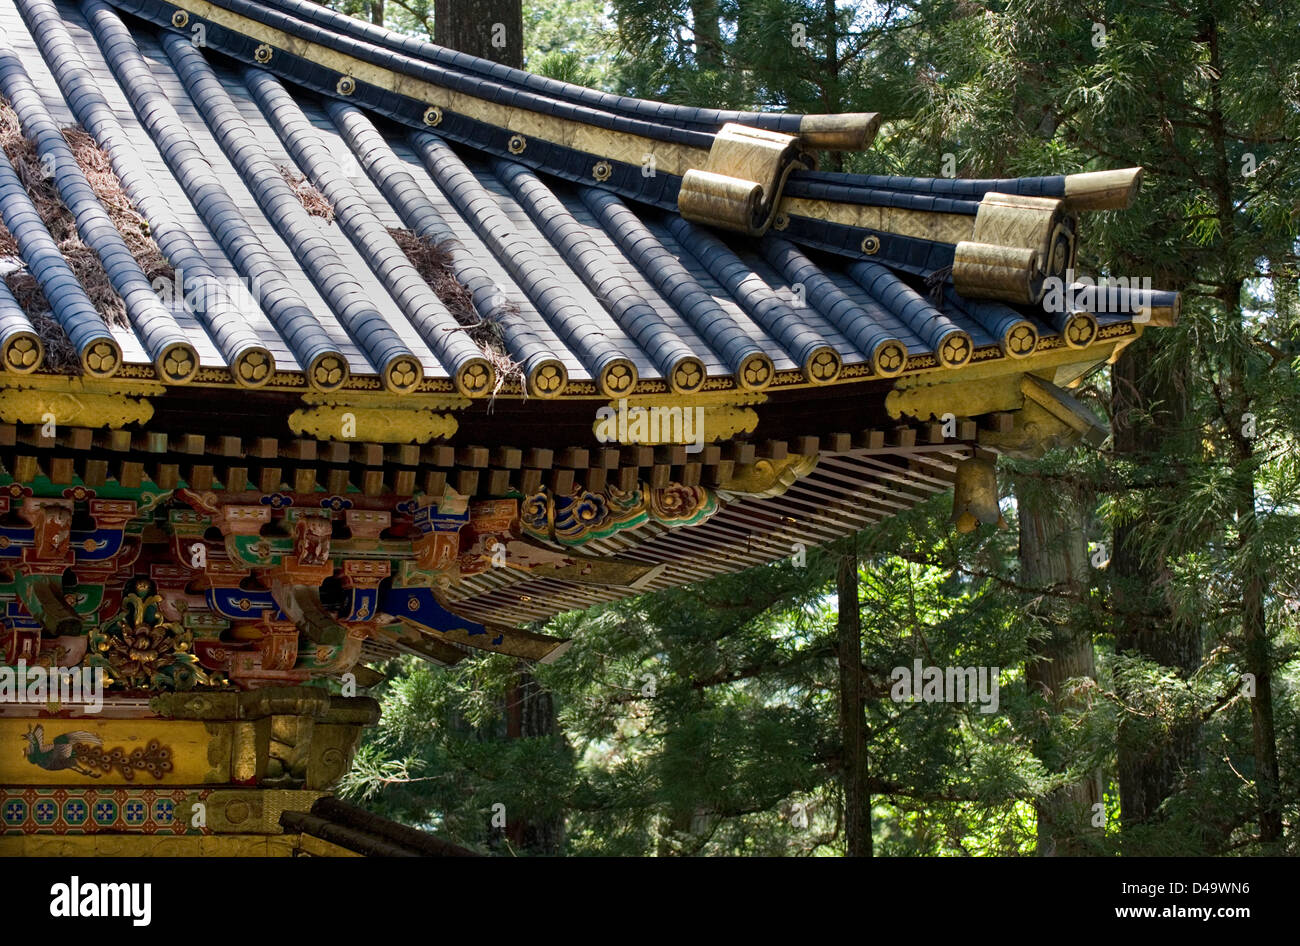 Ornate gilded eave overhang support detail of a sacred building at the Toshogu Shrine in Nikko, Tochigi, Japan. Stock Photo